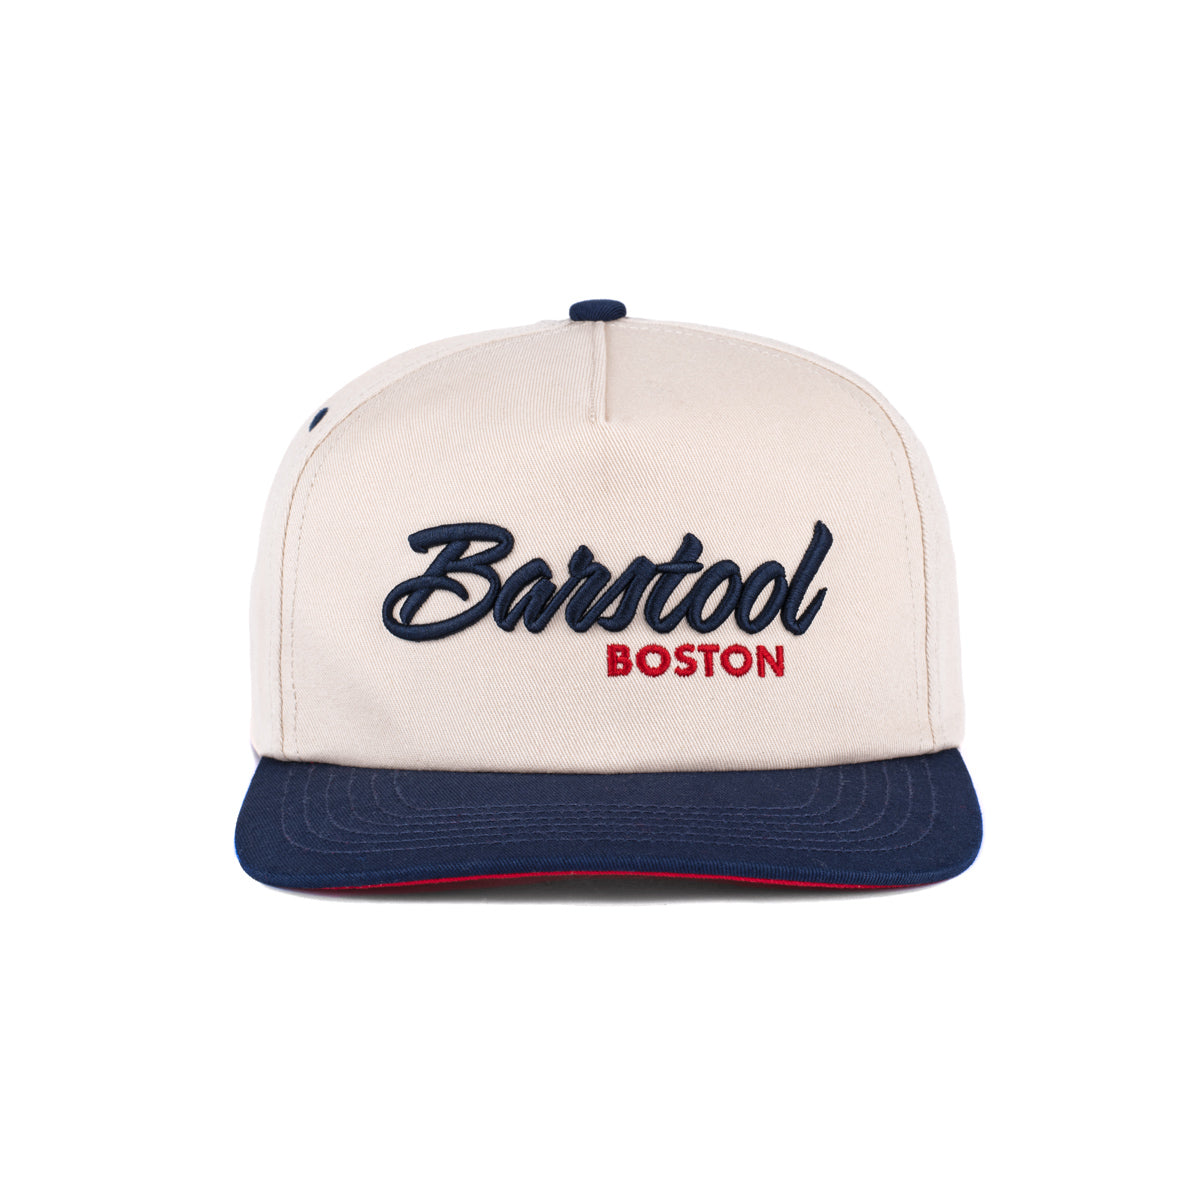 Barstool Boston Retro Snapback Hat-Hats-Barstool Sports-Cream-One Size-Barstool Sports